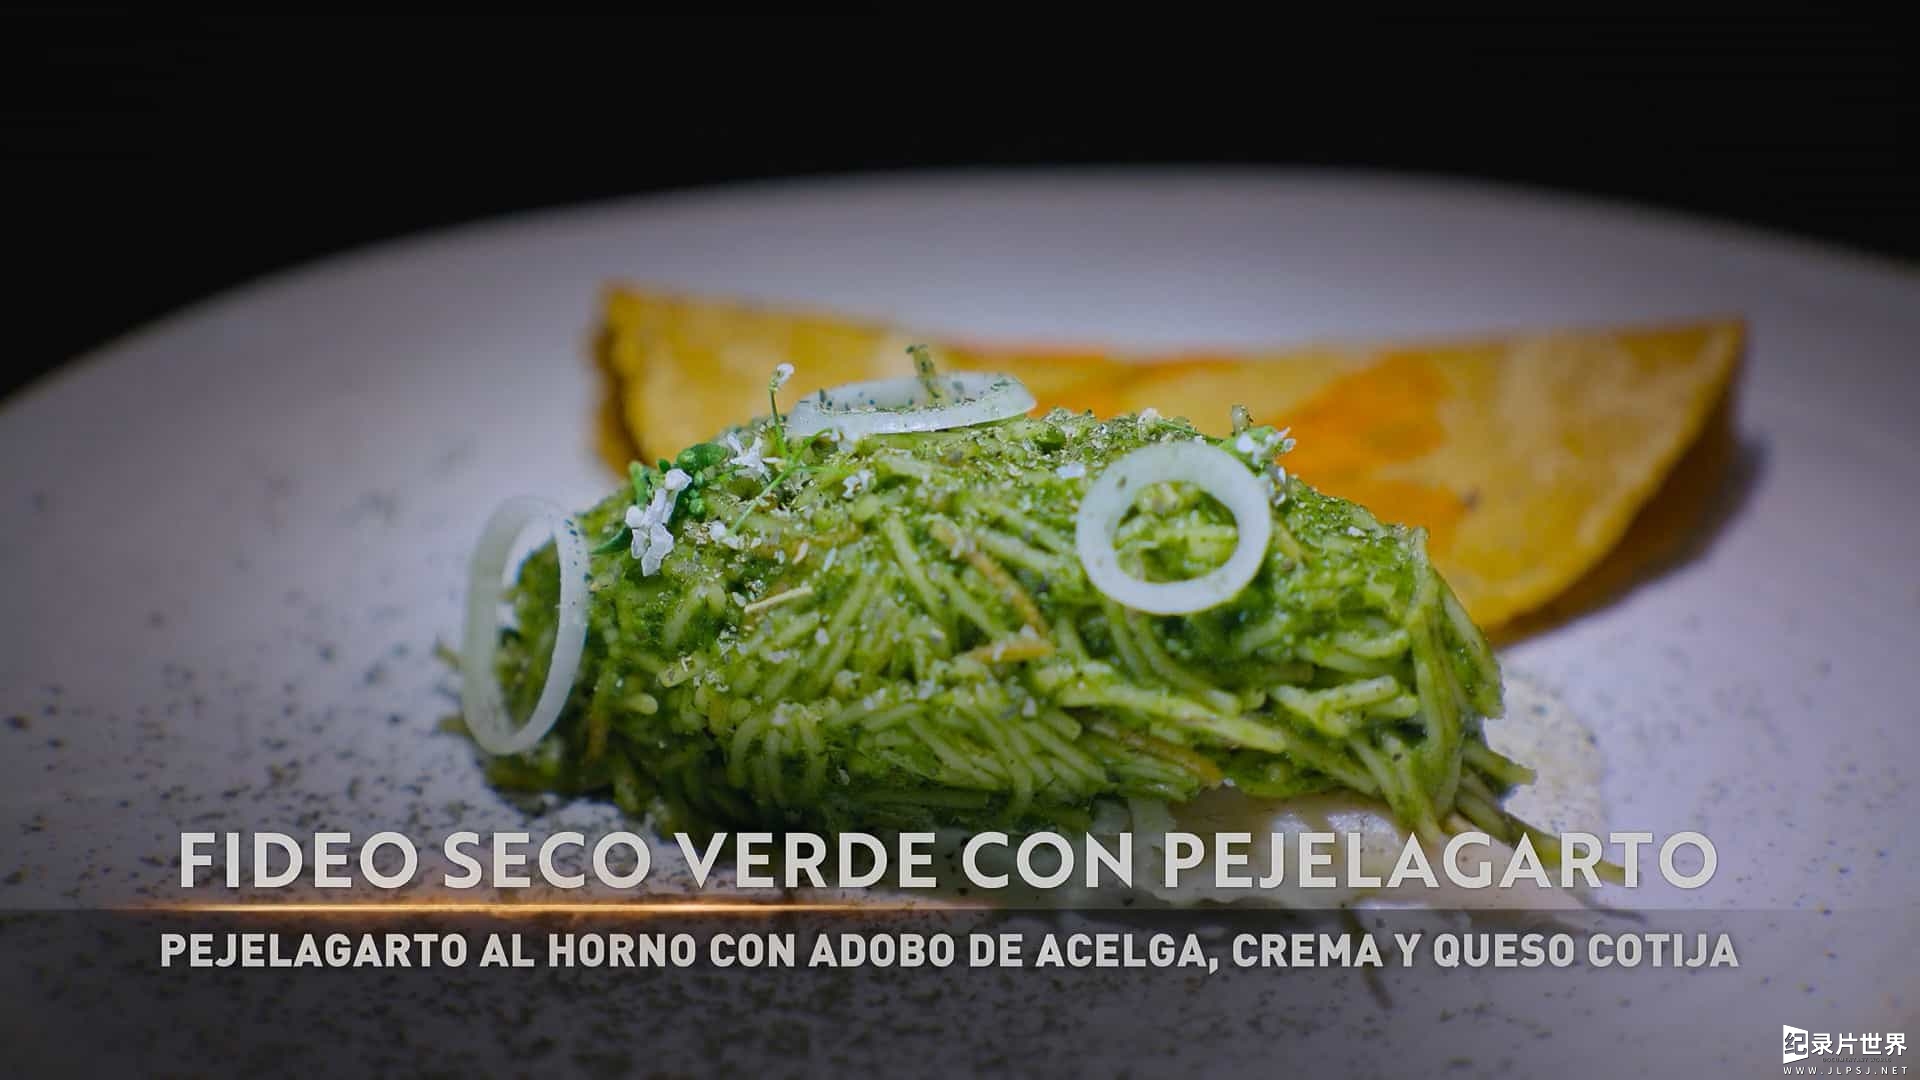 Netflix纪录片《铁人料理：墨西哥篇 Iron Chef Mexico 2022》全8集